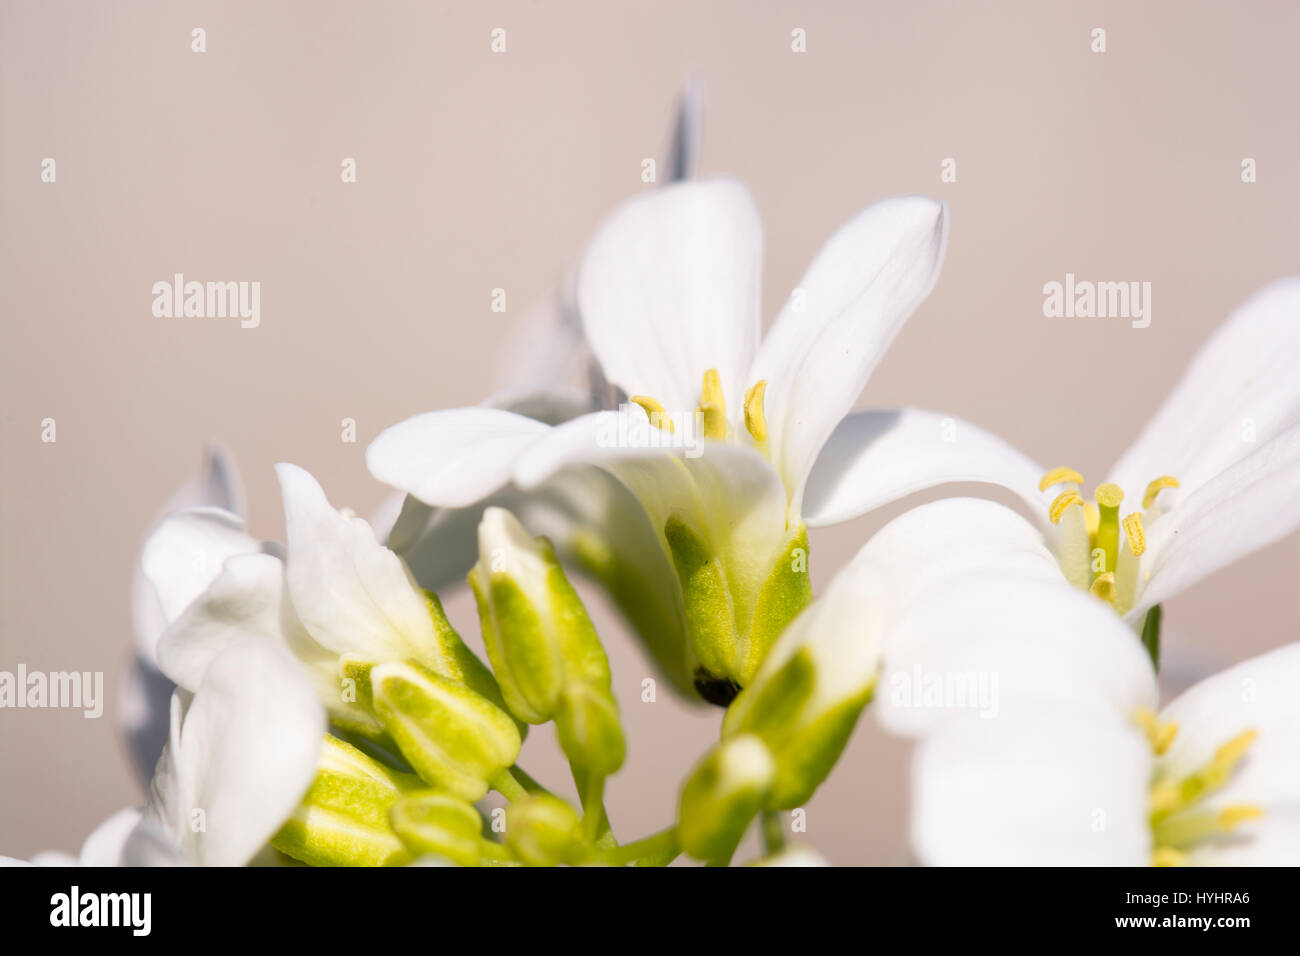 Iberis flowers in close up Stock Photo